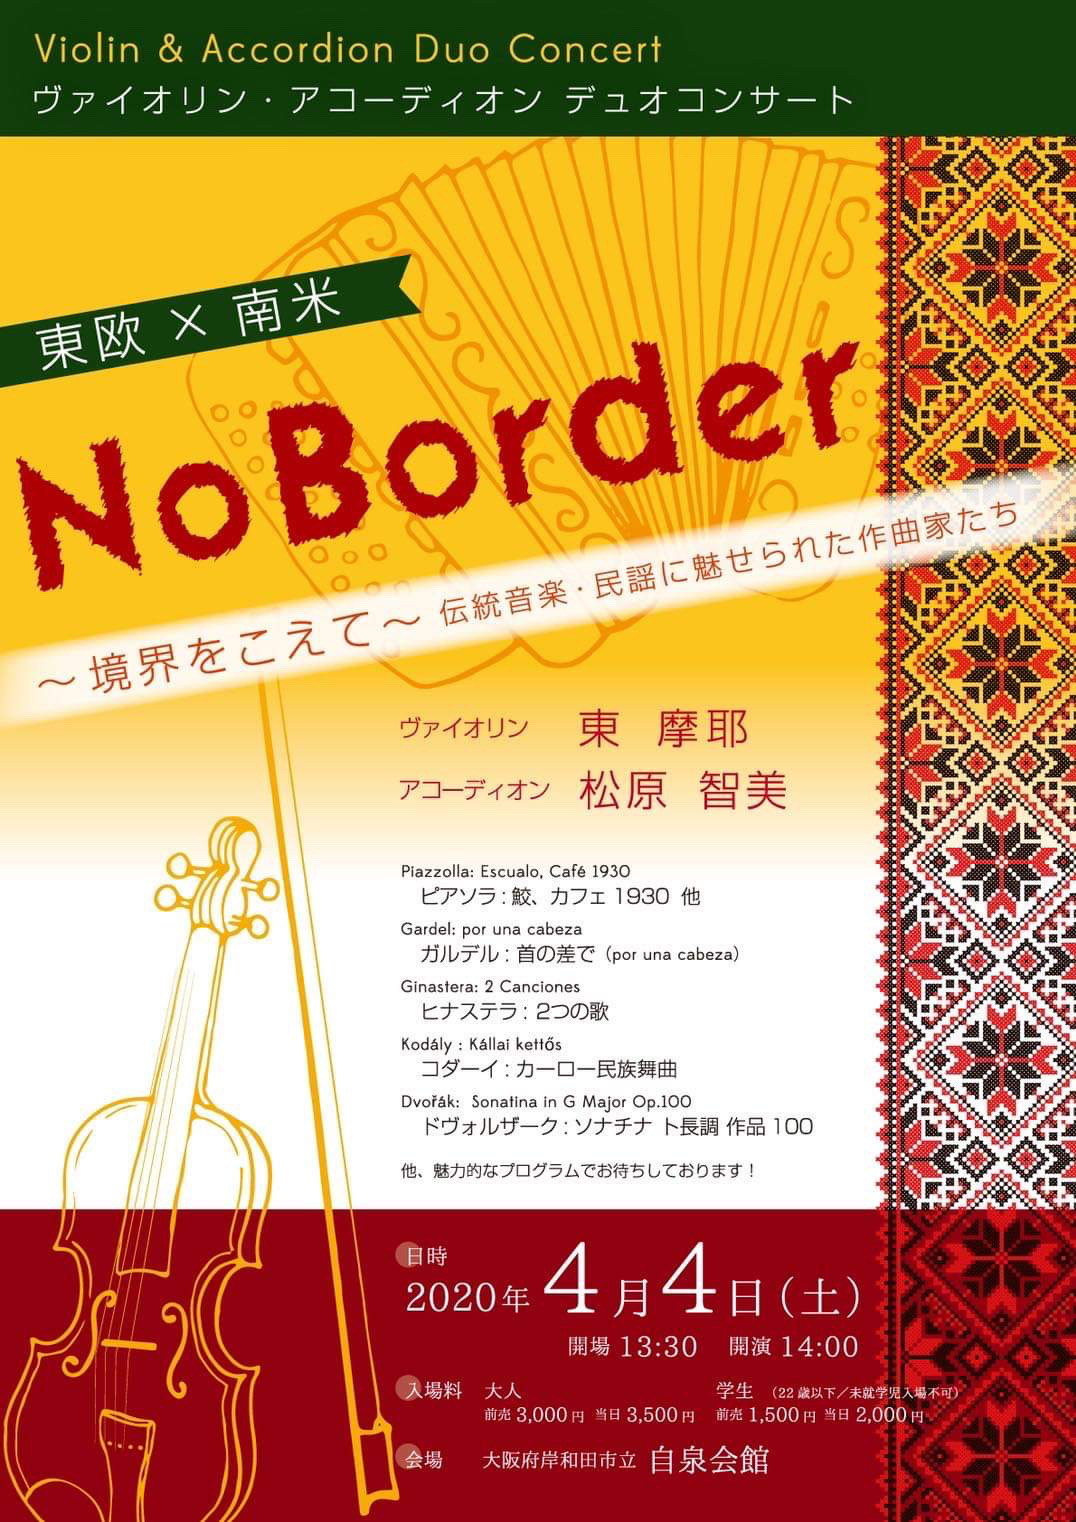 No Border